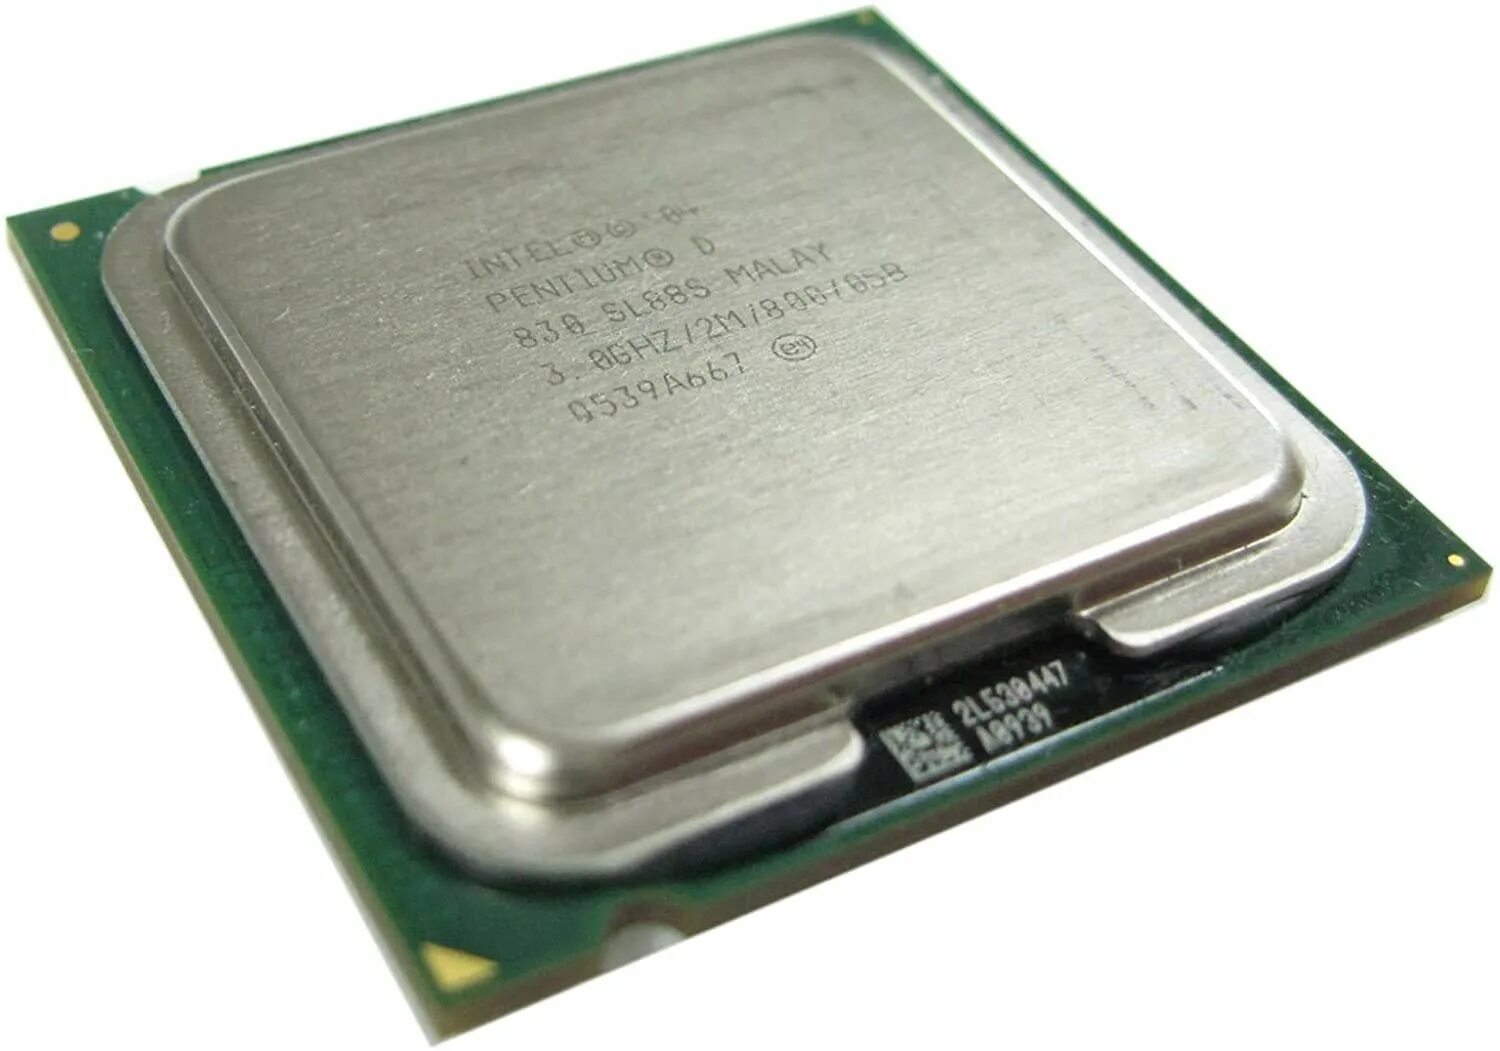 Процессор Intel Pentium d 830. Процессор Intel Core 2 Duo mobile t7300 Merom. Процессор Intel Xeon e5-2680 Sandy Bridge-Ep. Процессор: Intel Pentium d 830 @ 3.00GHZ; AMD Athlon 64 x2 Dual Core 3600+.